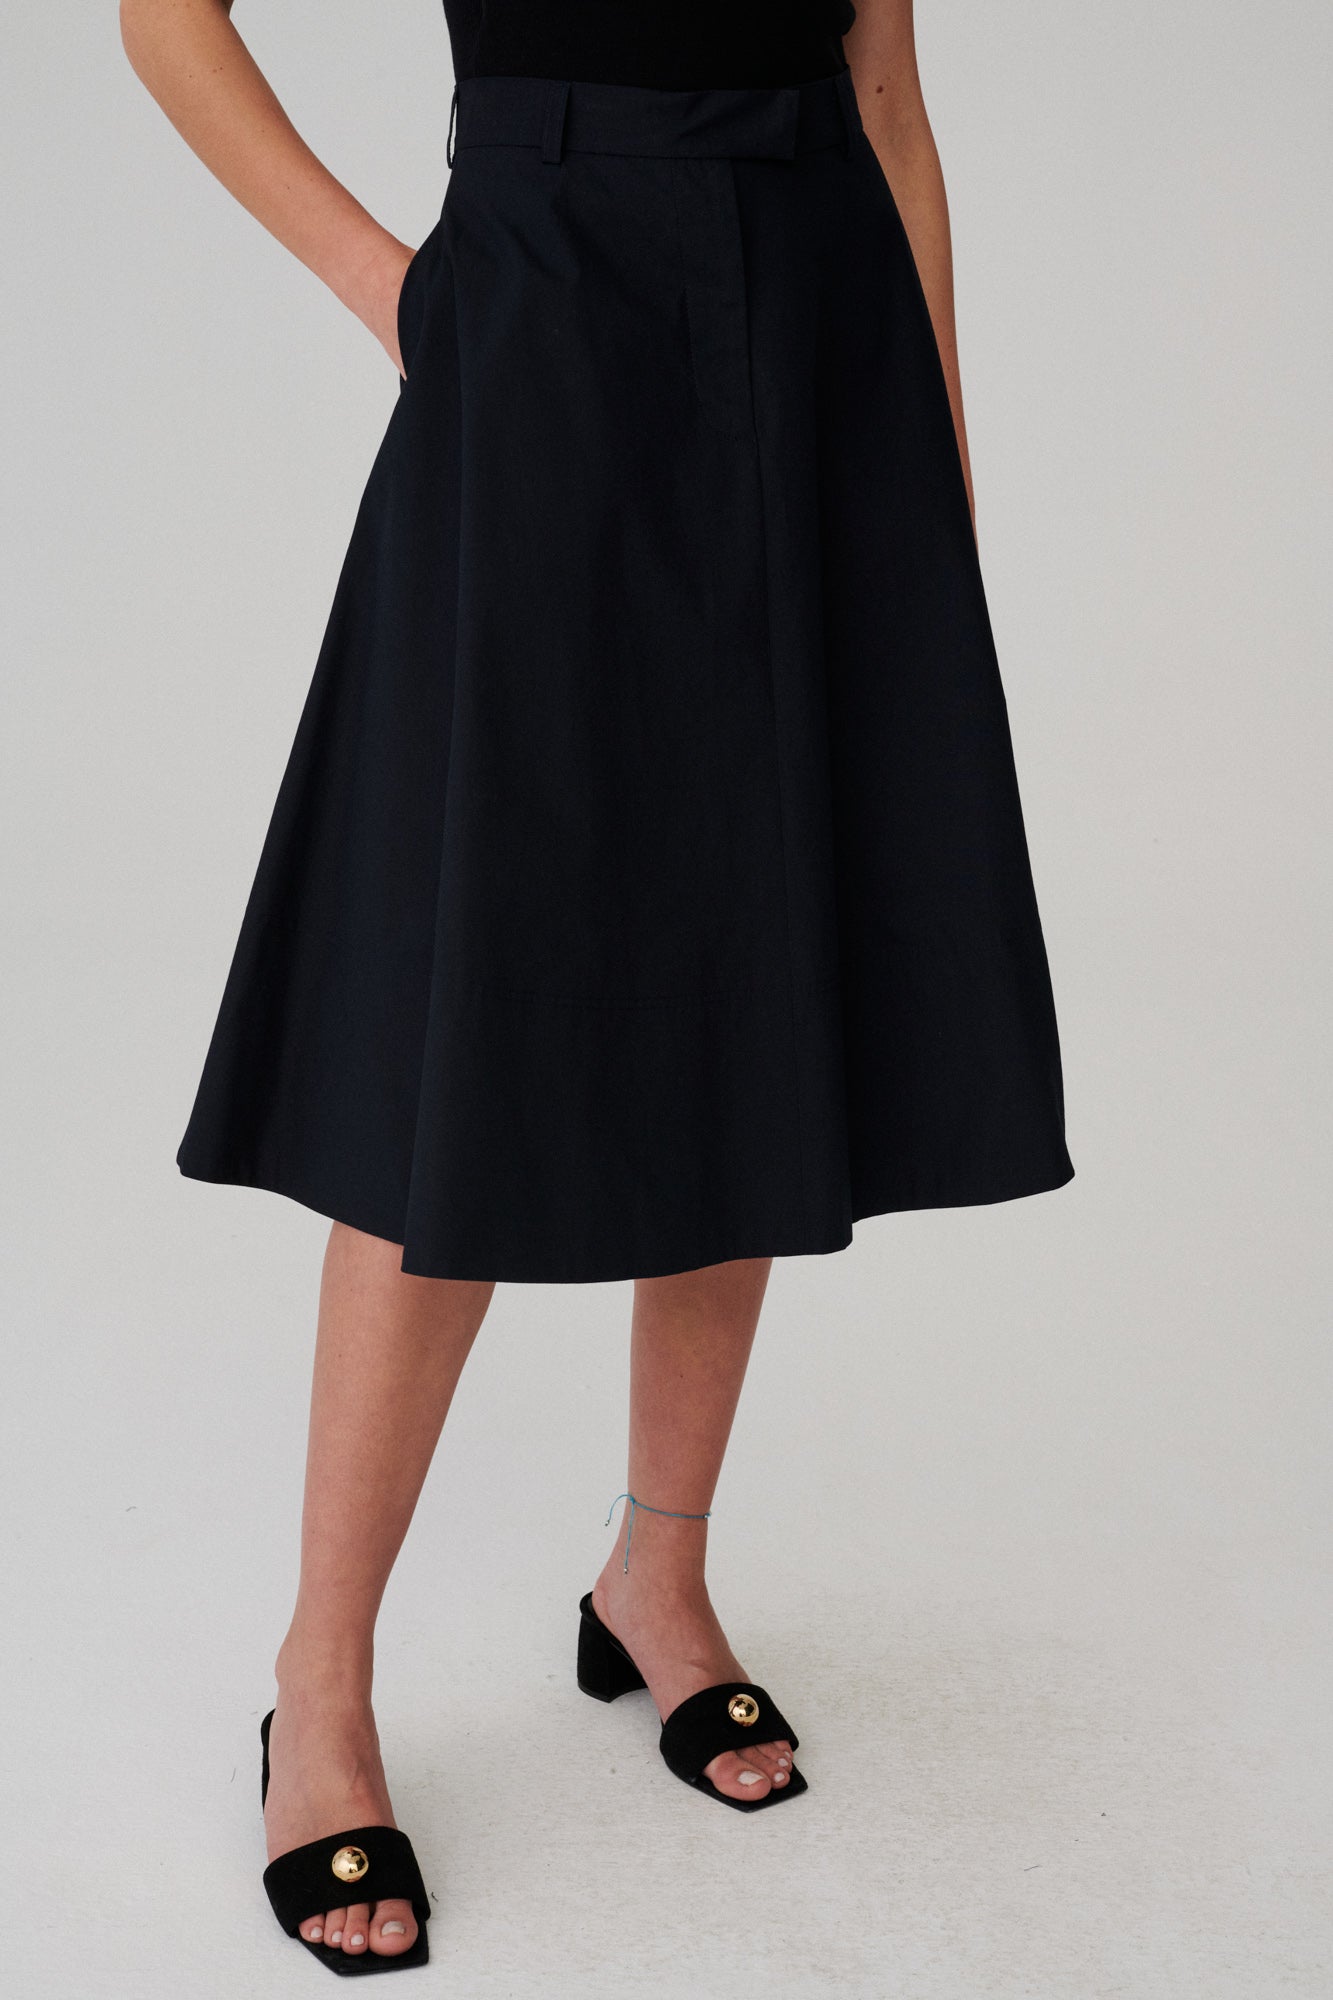 Skirt in organic cotton / 07 / 06 / onyx black